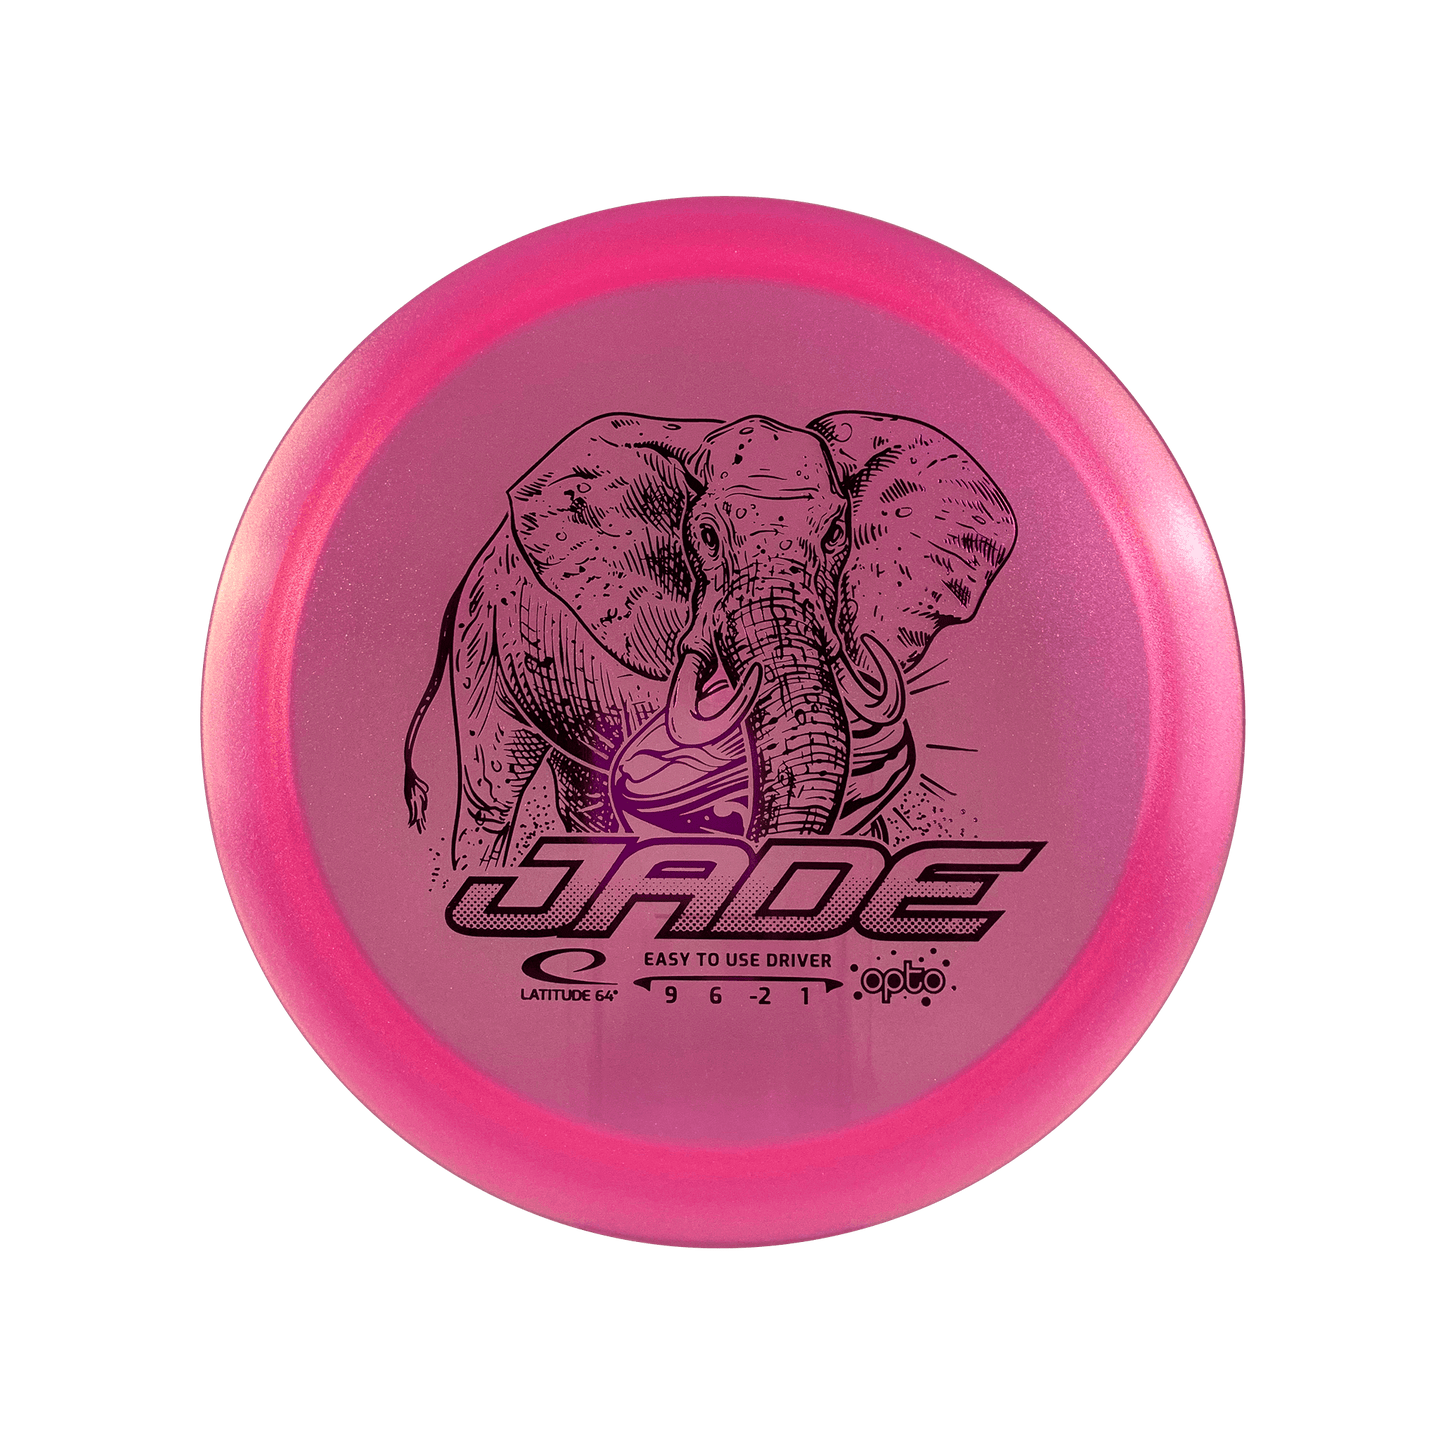 Opto Glimmer Jade Disc Latitude 64 pink 159 